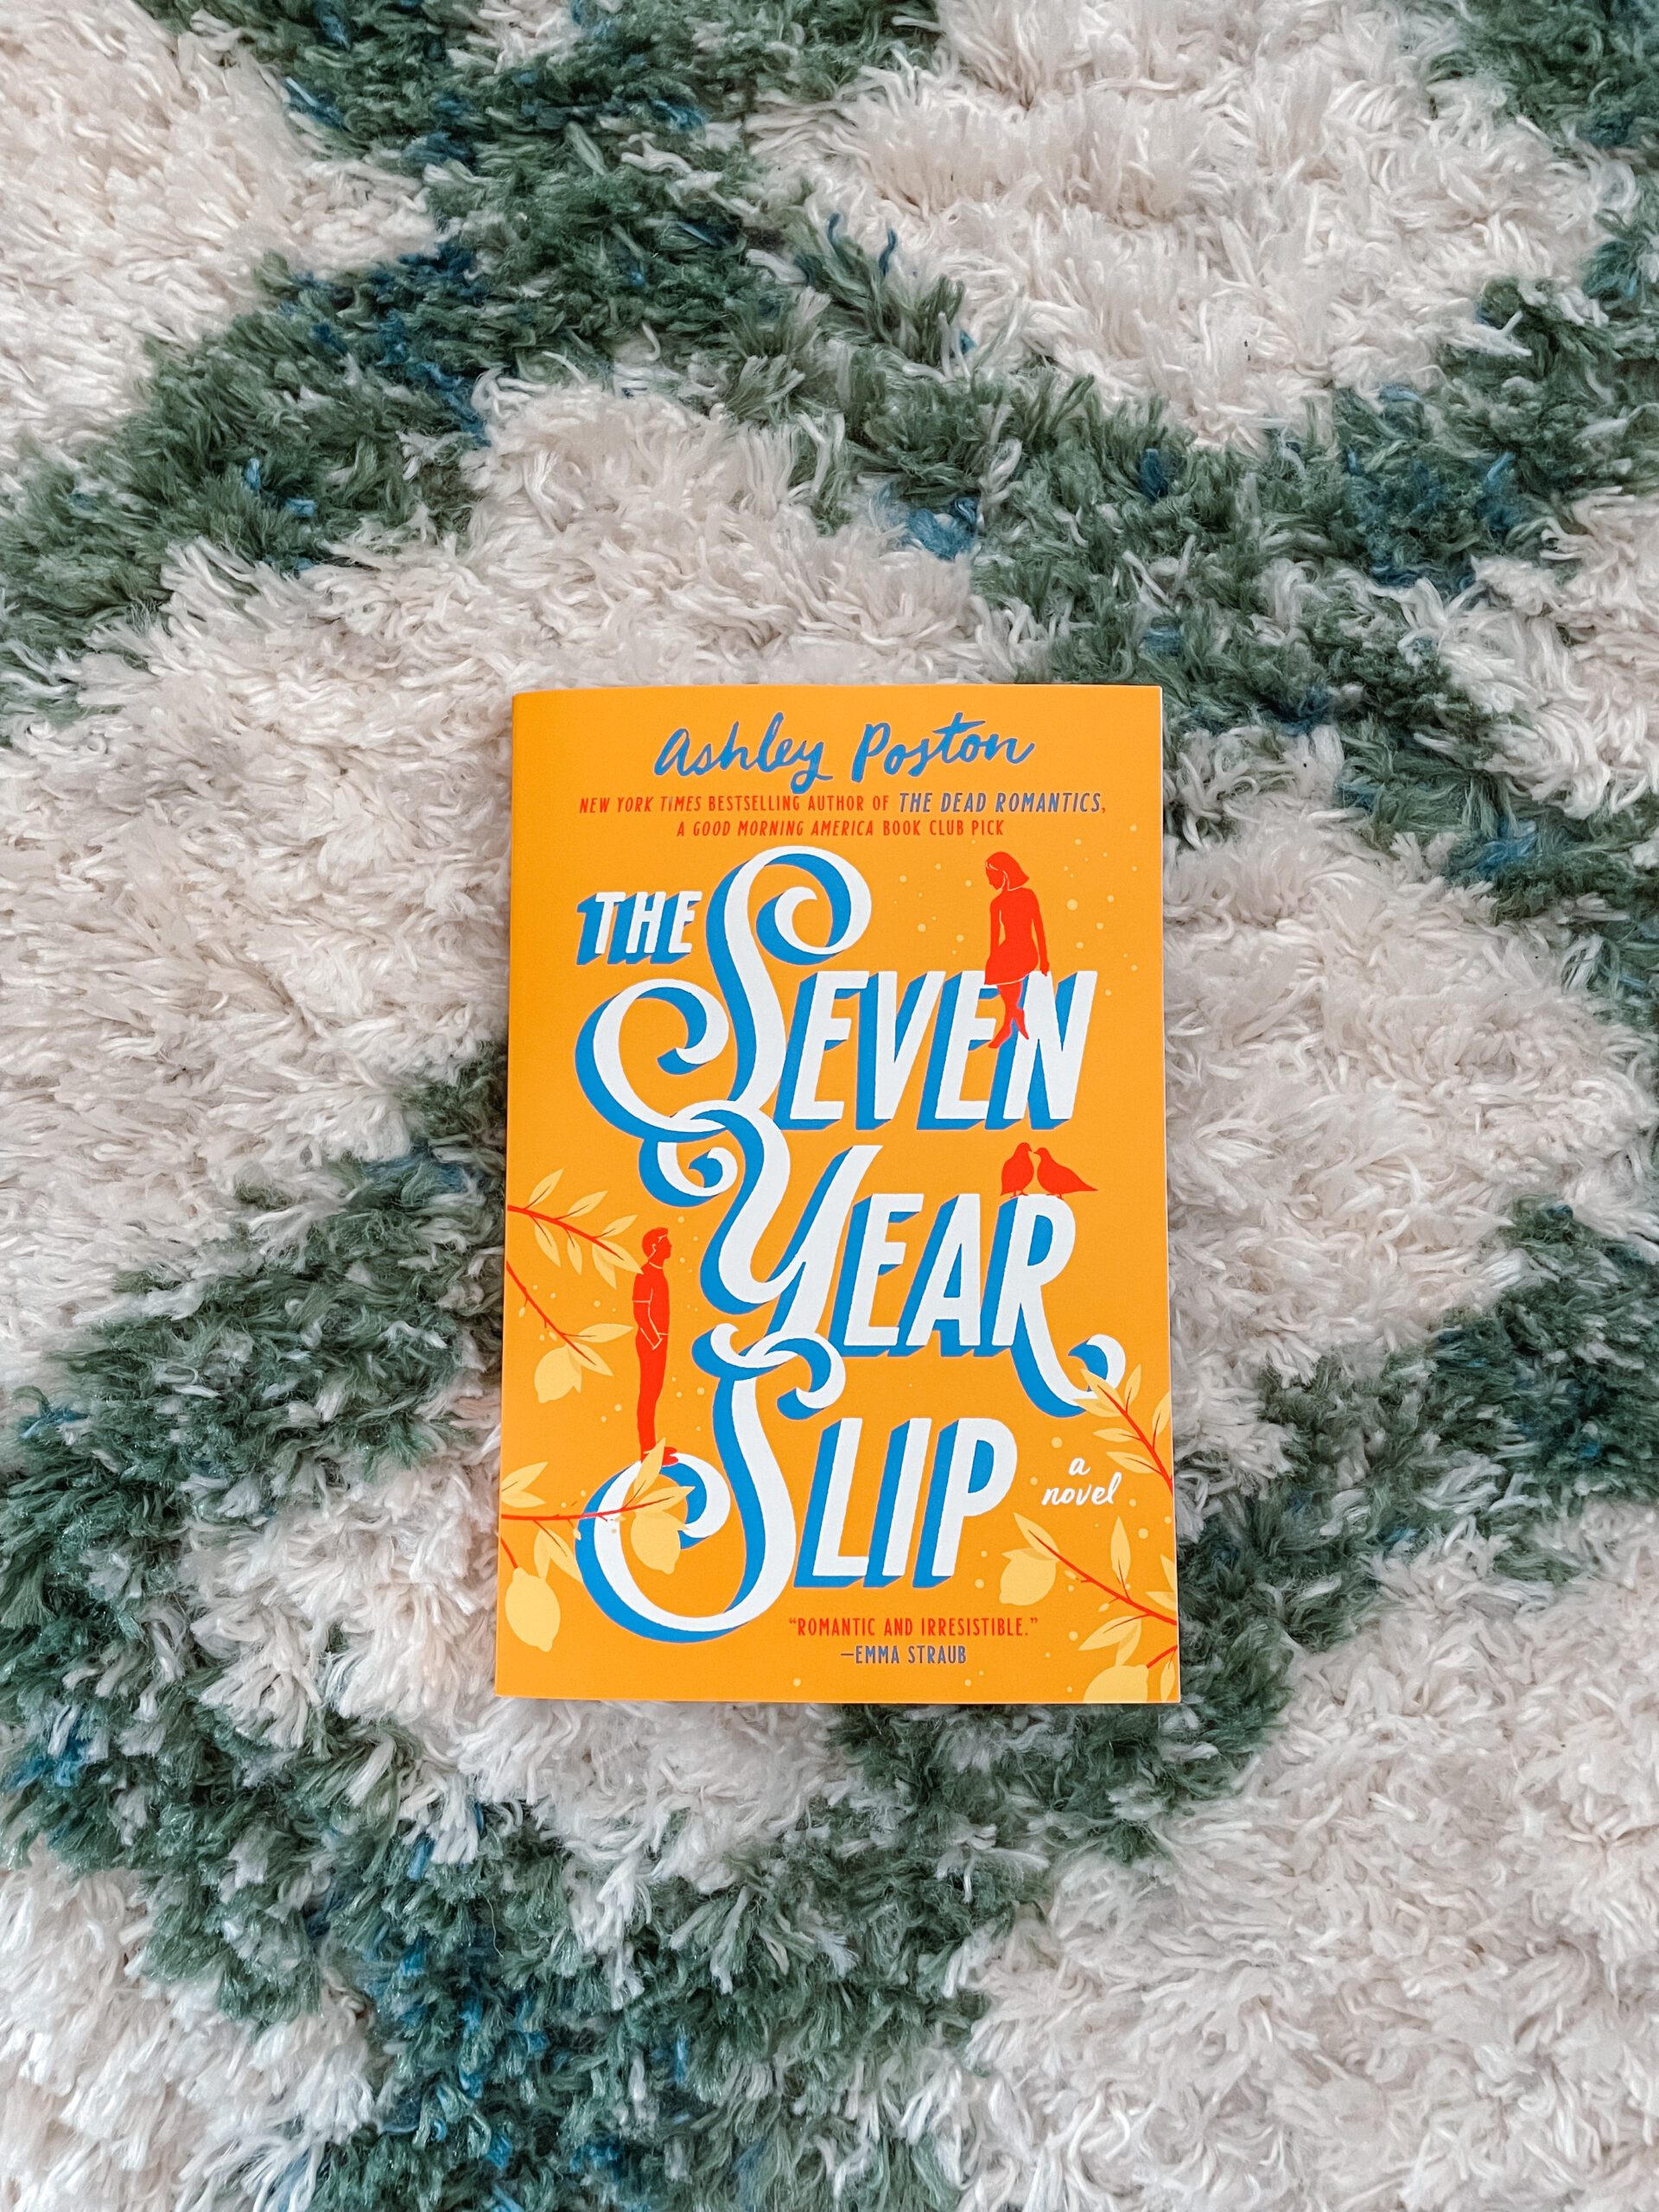 Mini-Reviews #24: The Seven Year Slip, Bad Summer People & Royal